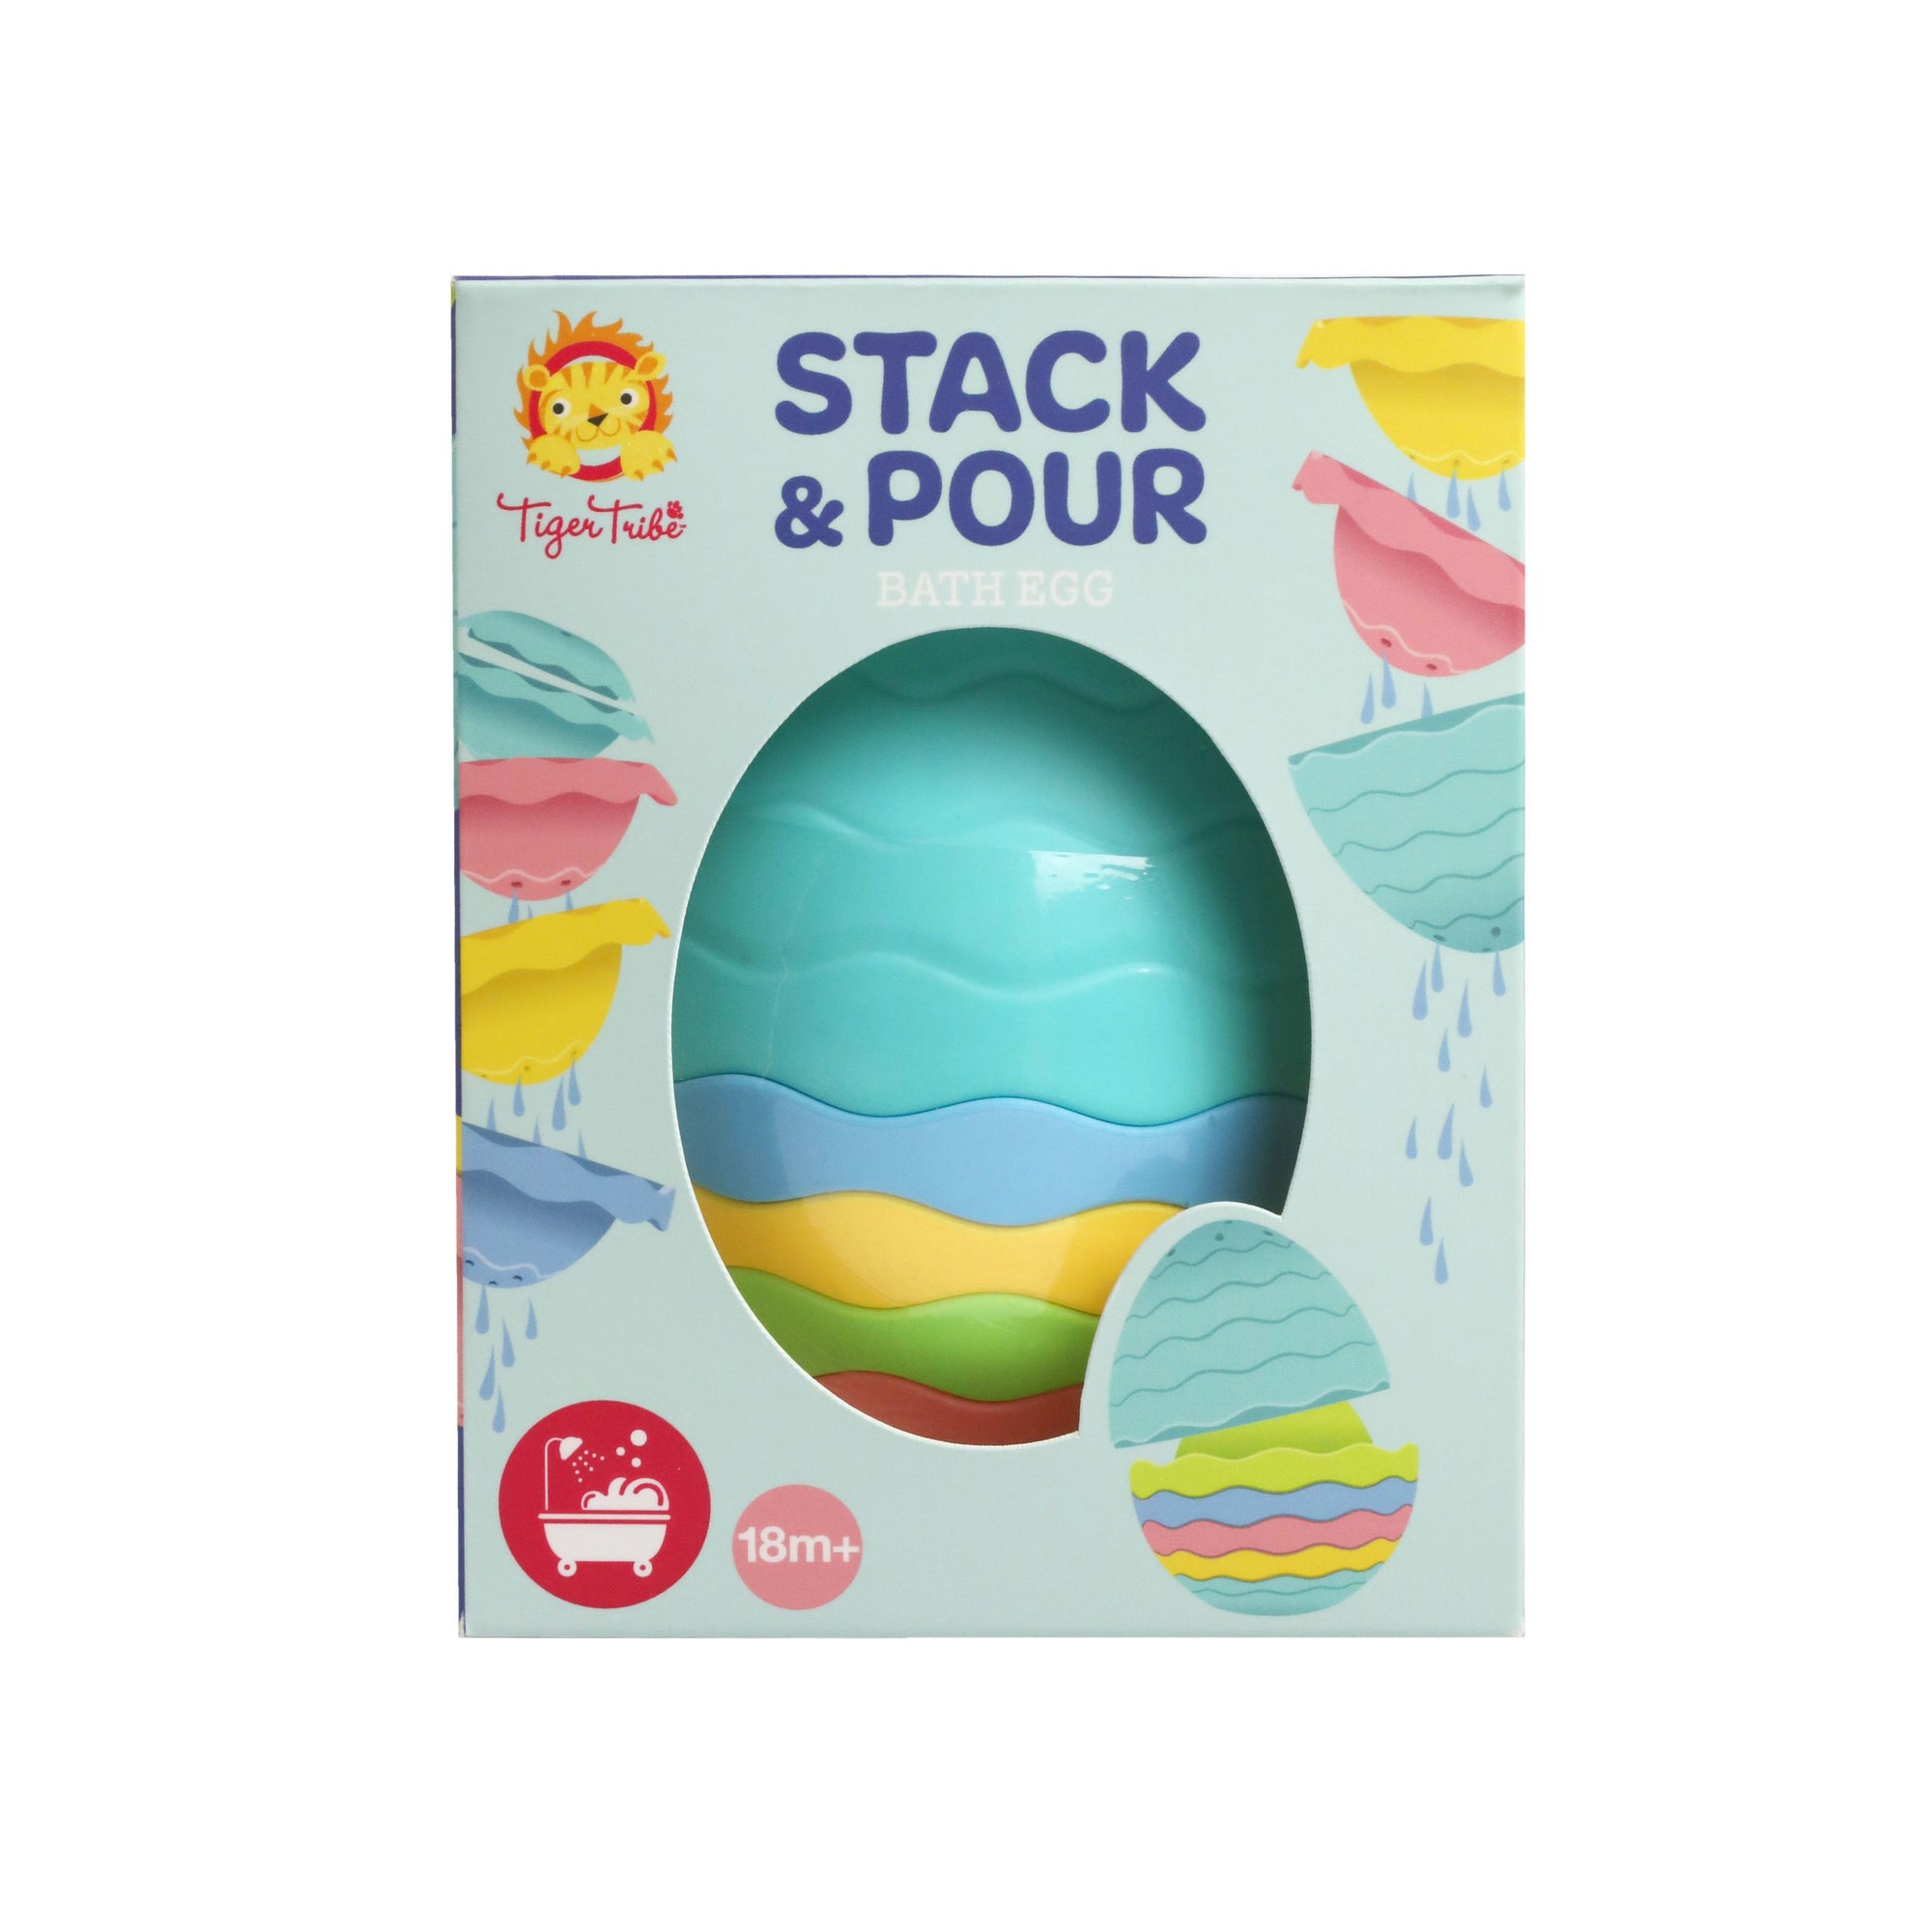 Stack & Pour (Bath Egg)